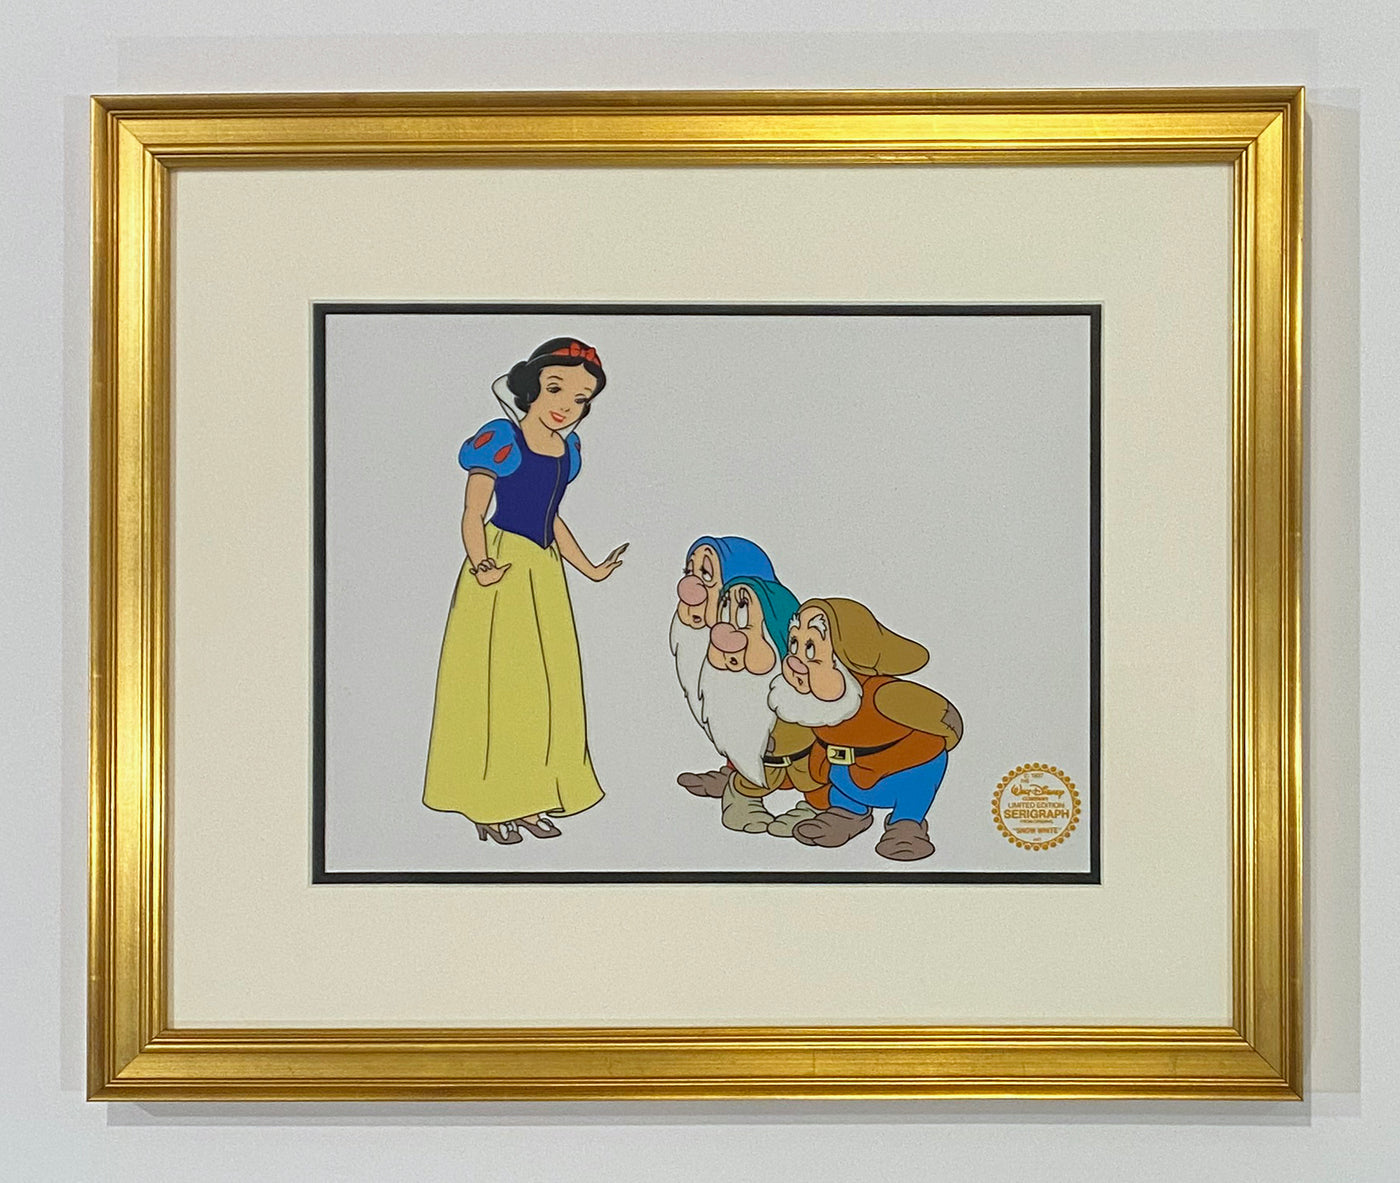 Original Walt Disney Snow White and the Seven Dwarfs Sericel